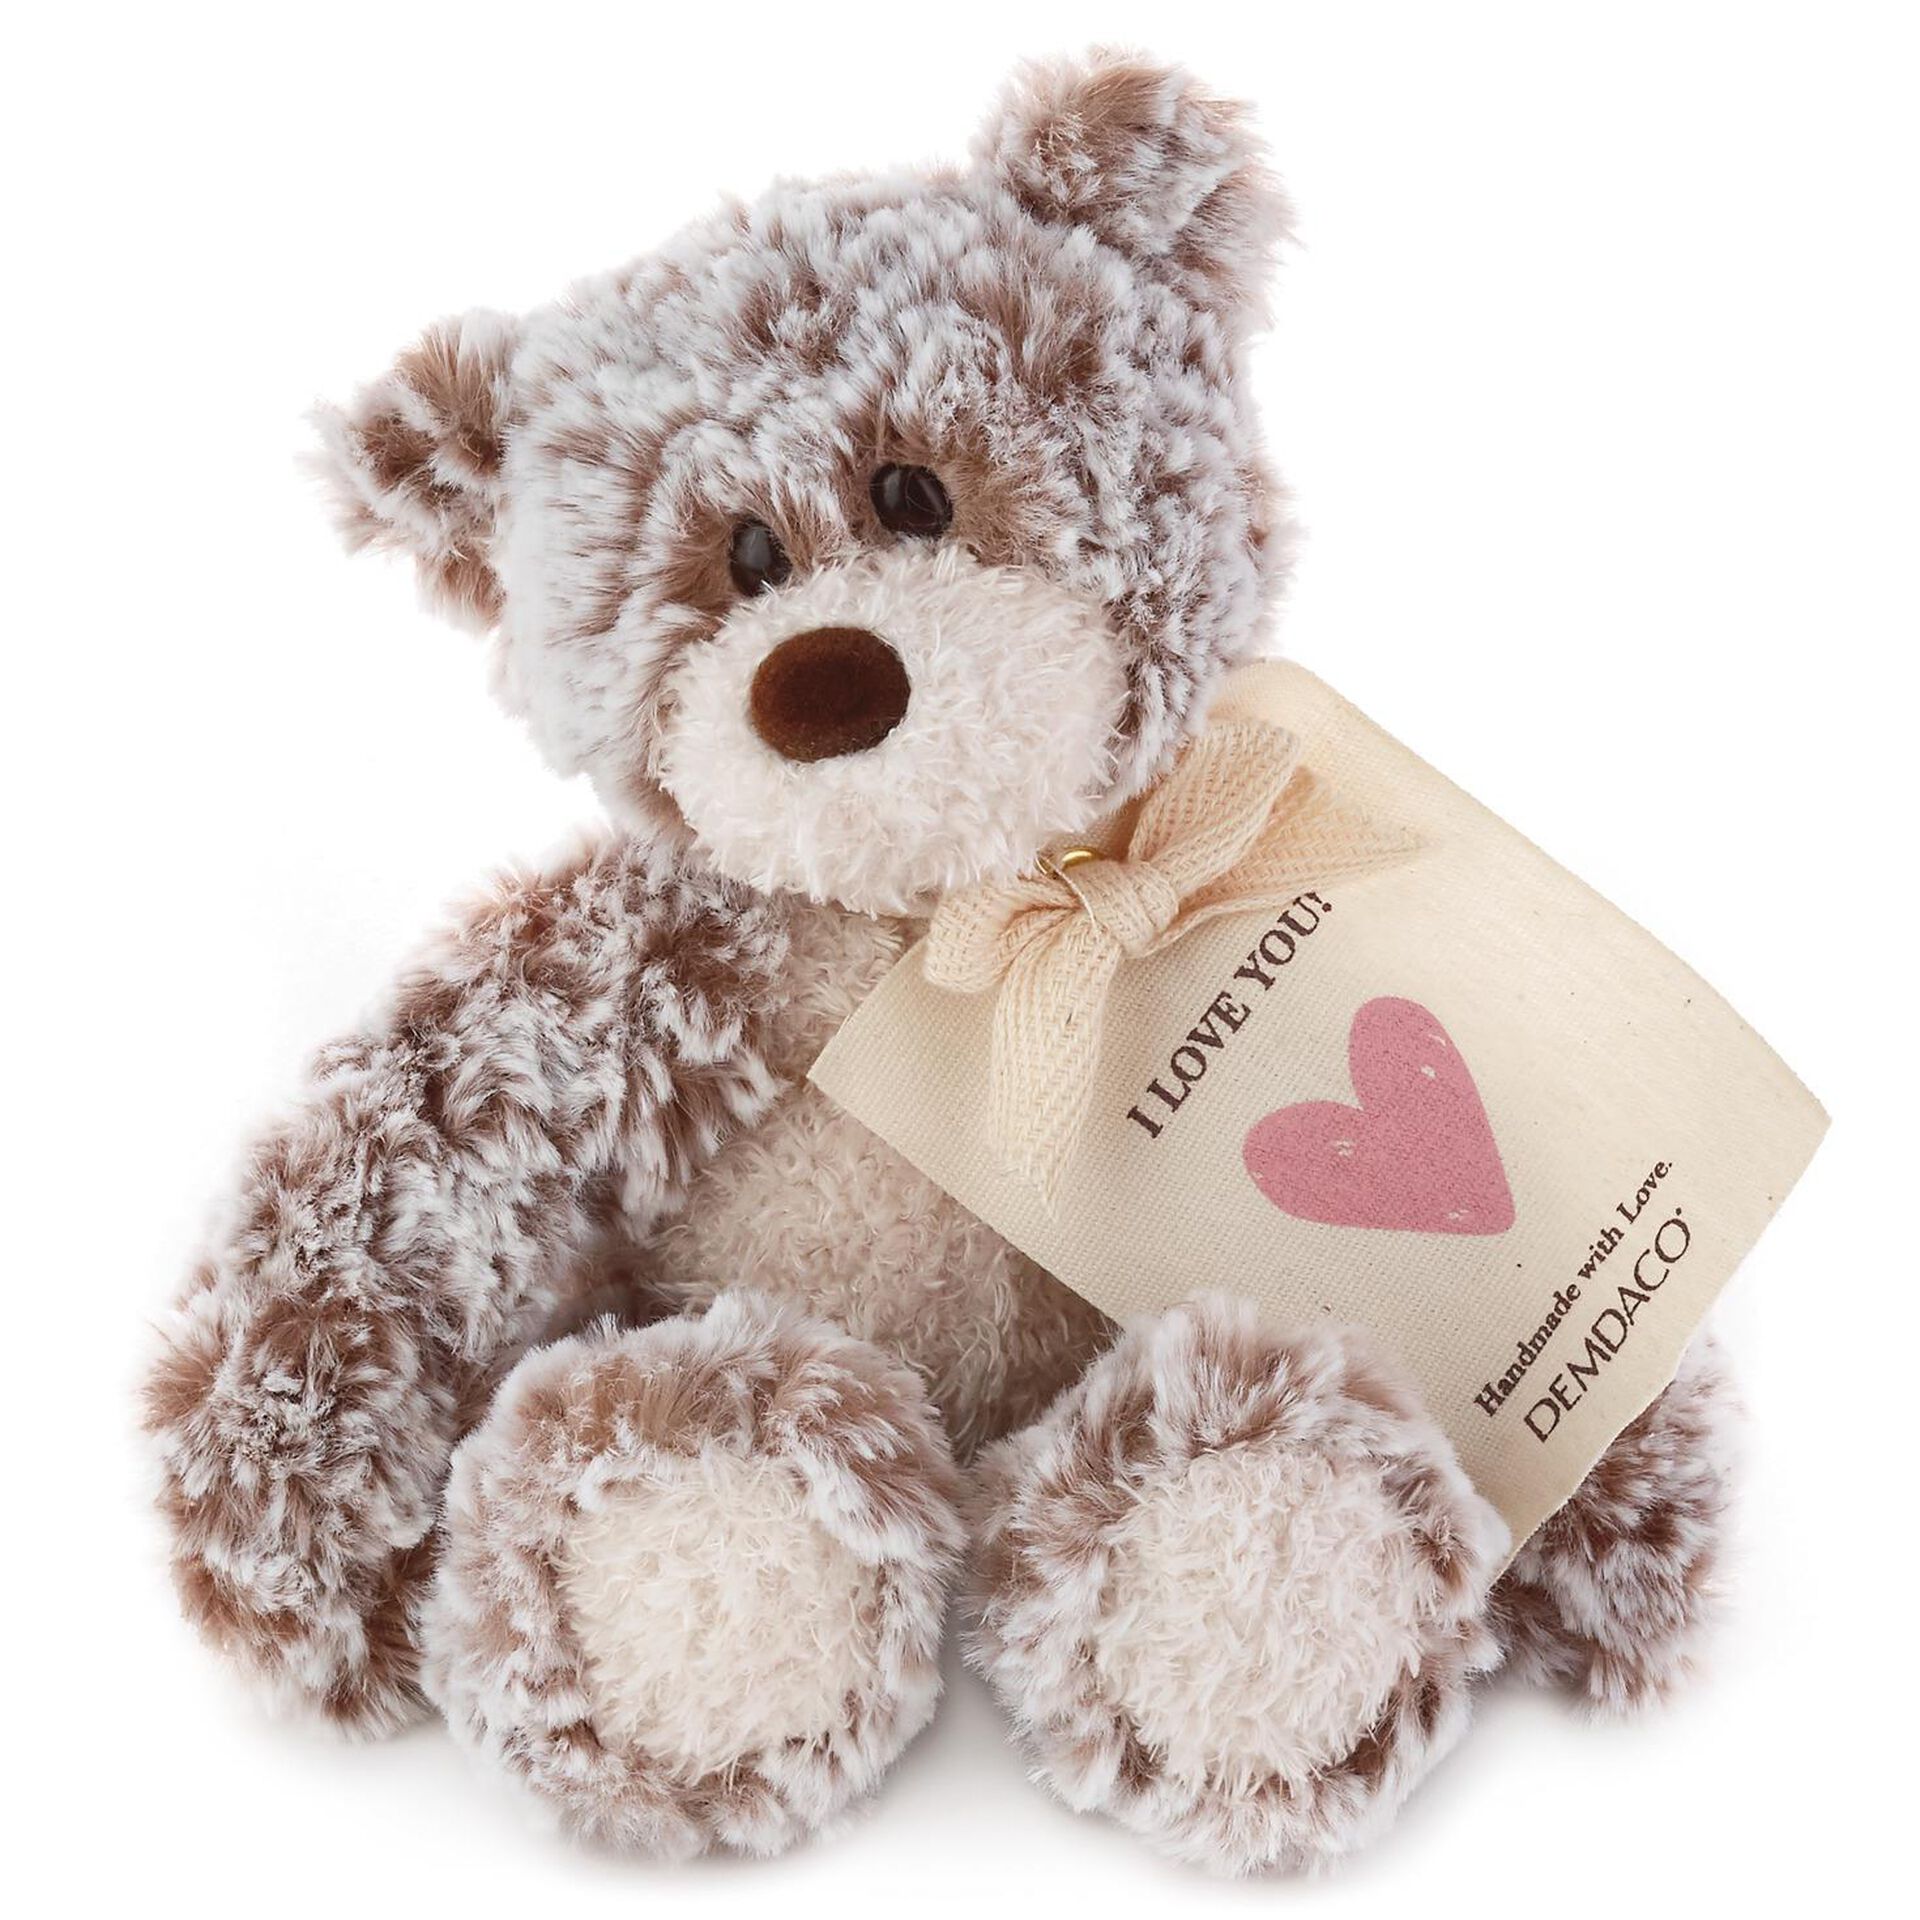 I Love You Small Giving Bear Stuffed Animal 8 5 Classic Stuffed Animals Hallmark